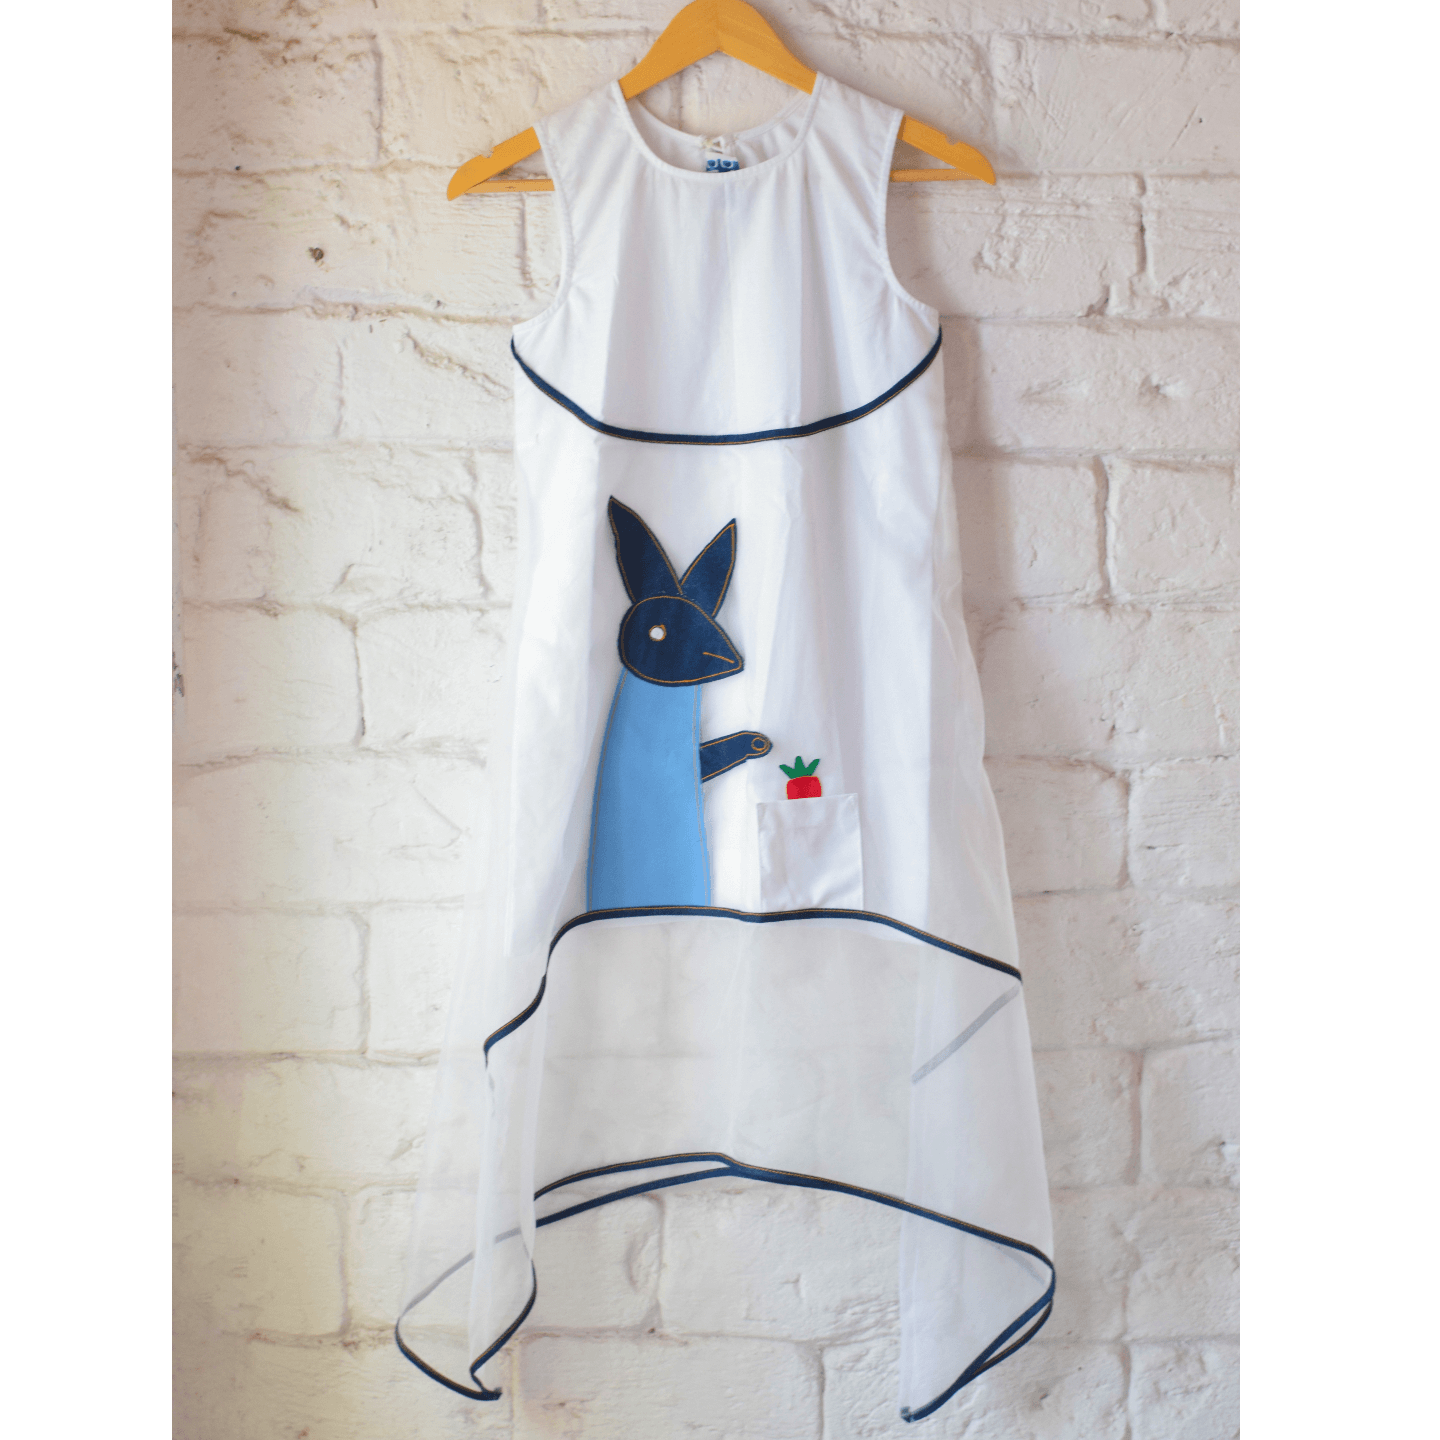 The Bugs Bunny Dress